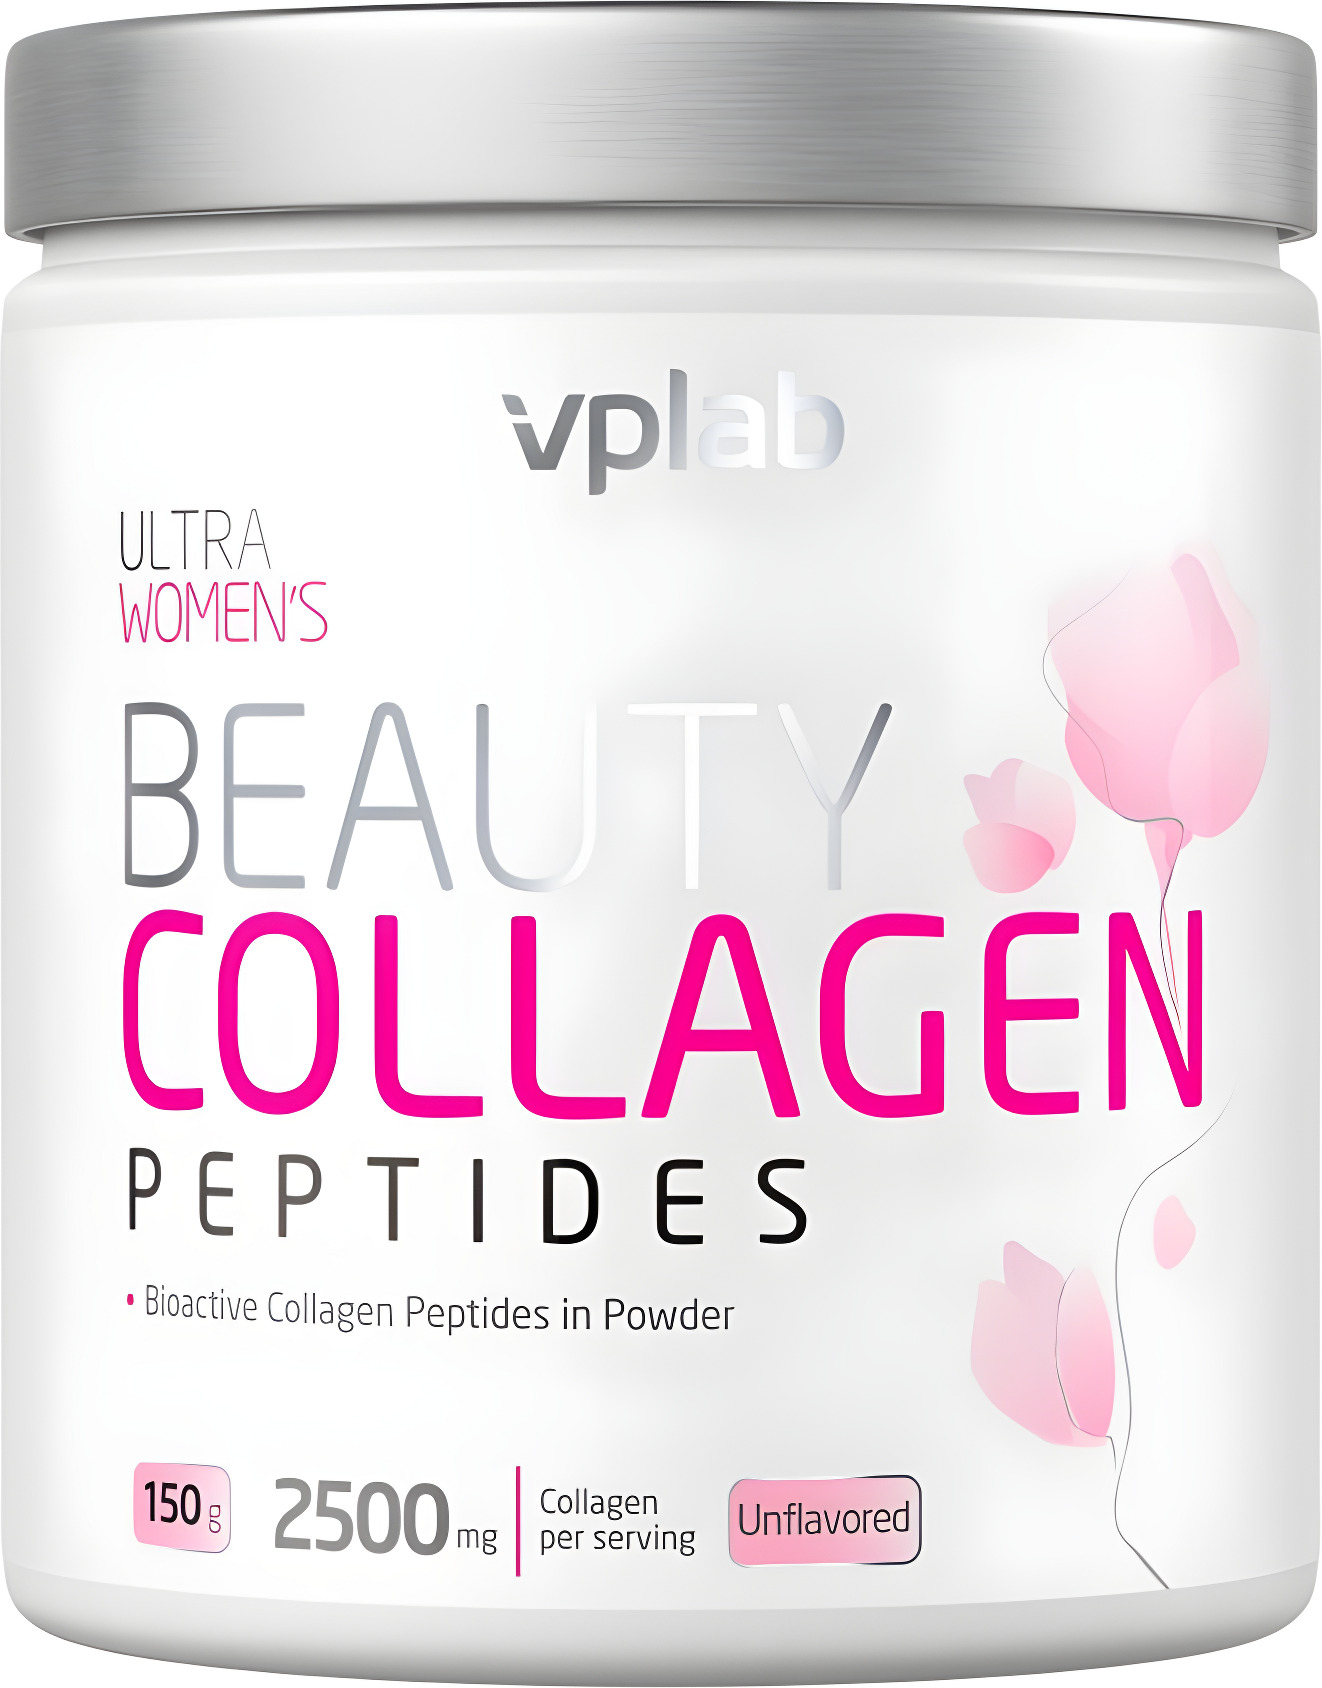 Коллаген отзывы людей. ВПЛАБ коллаген для женщин Бьюти 2500мг. Коллаген VPLAB / Beauty Collagen Peptides / 150 g. Коллаген VPLAB Collagen Peptides. ВПЛАБ Бьюти коллаген пептиды VPLAB Beauty Collagen Peptides.